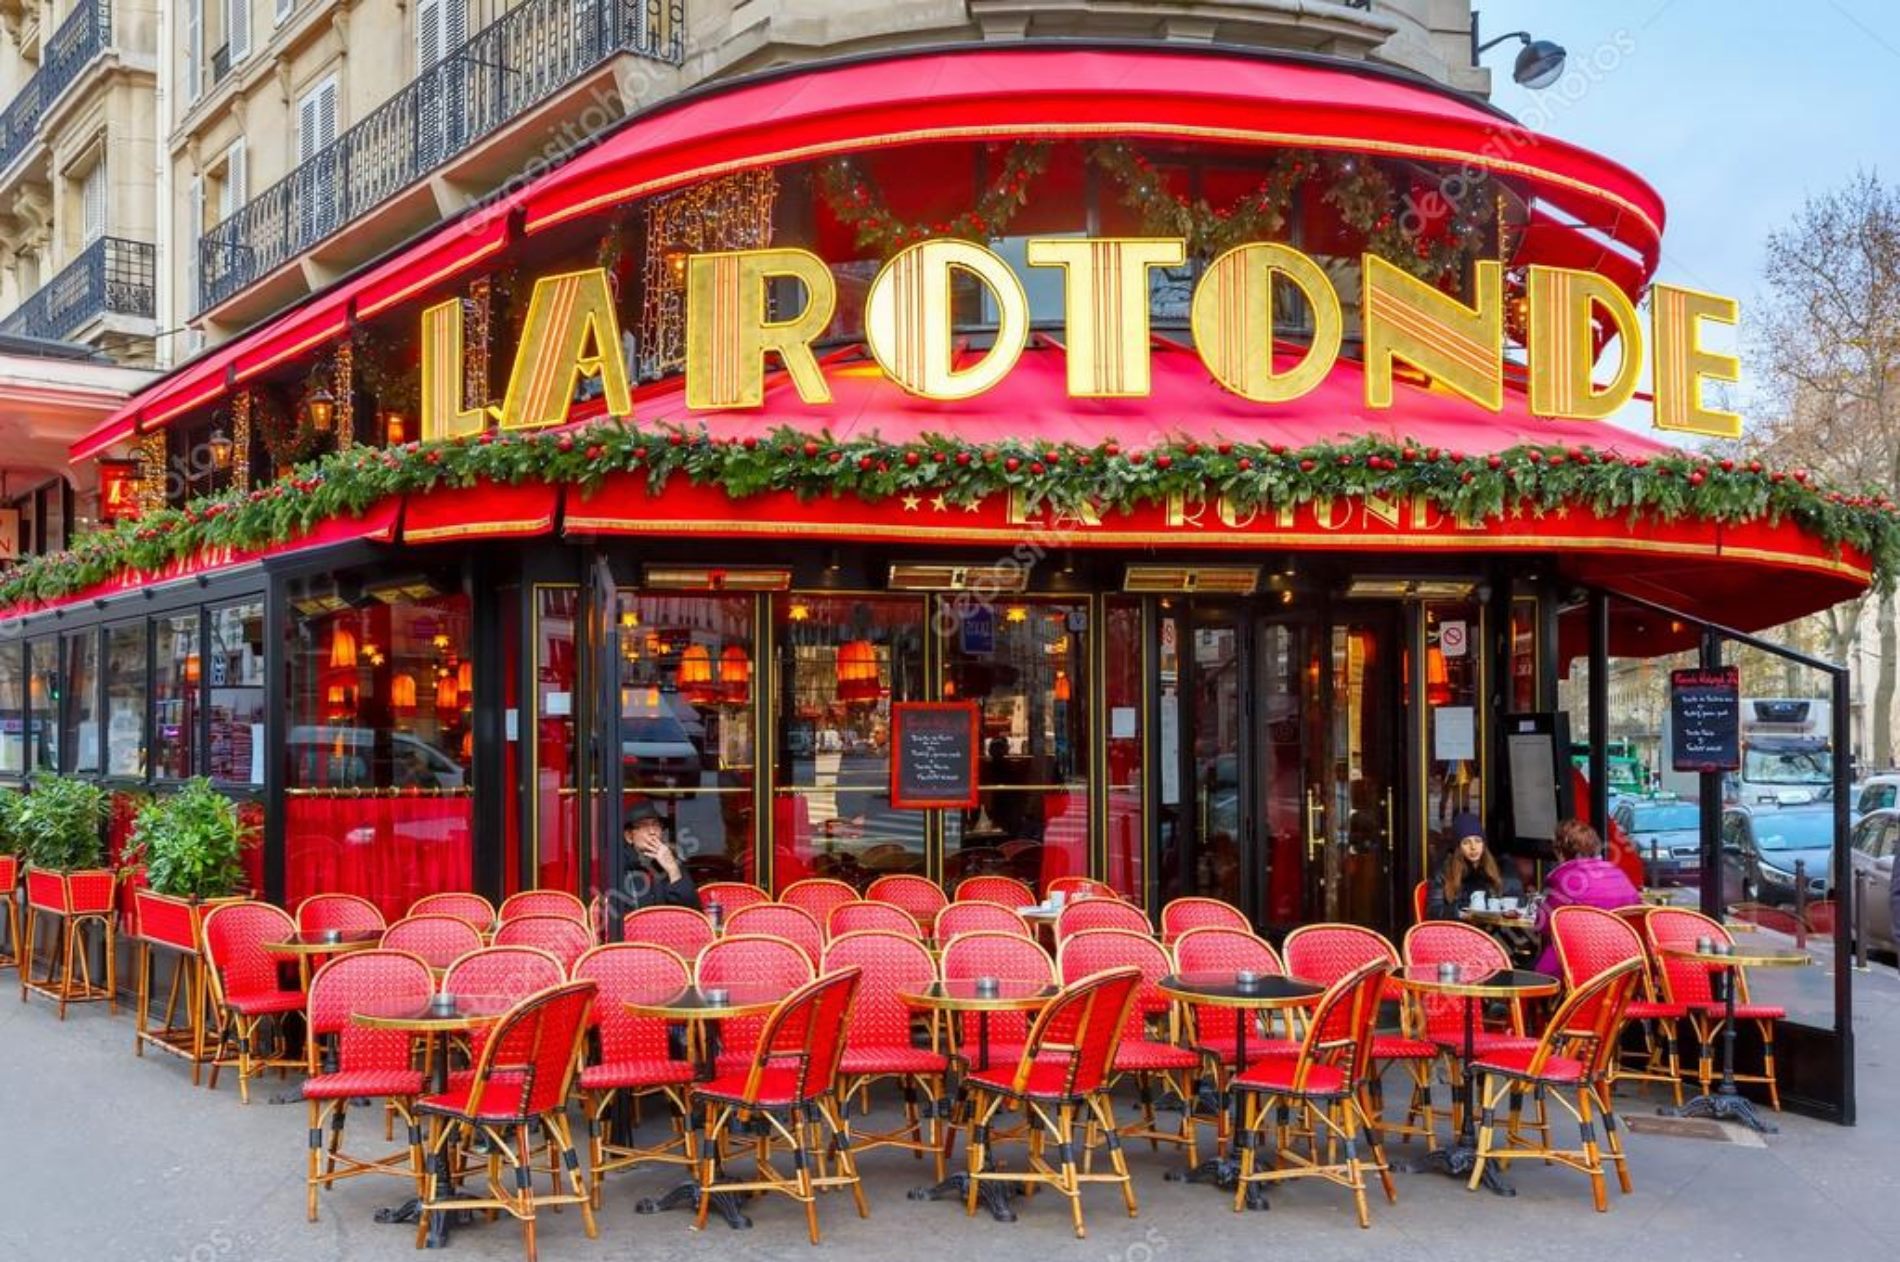 La Rotonde Paris Writers cafe